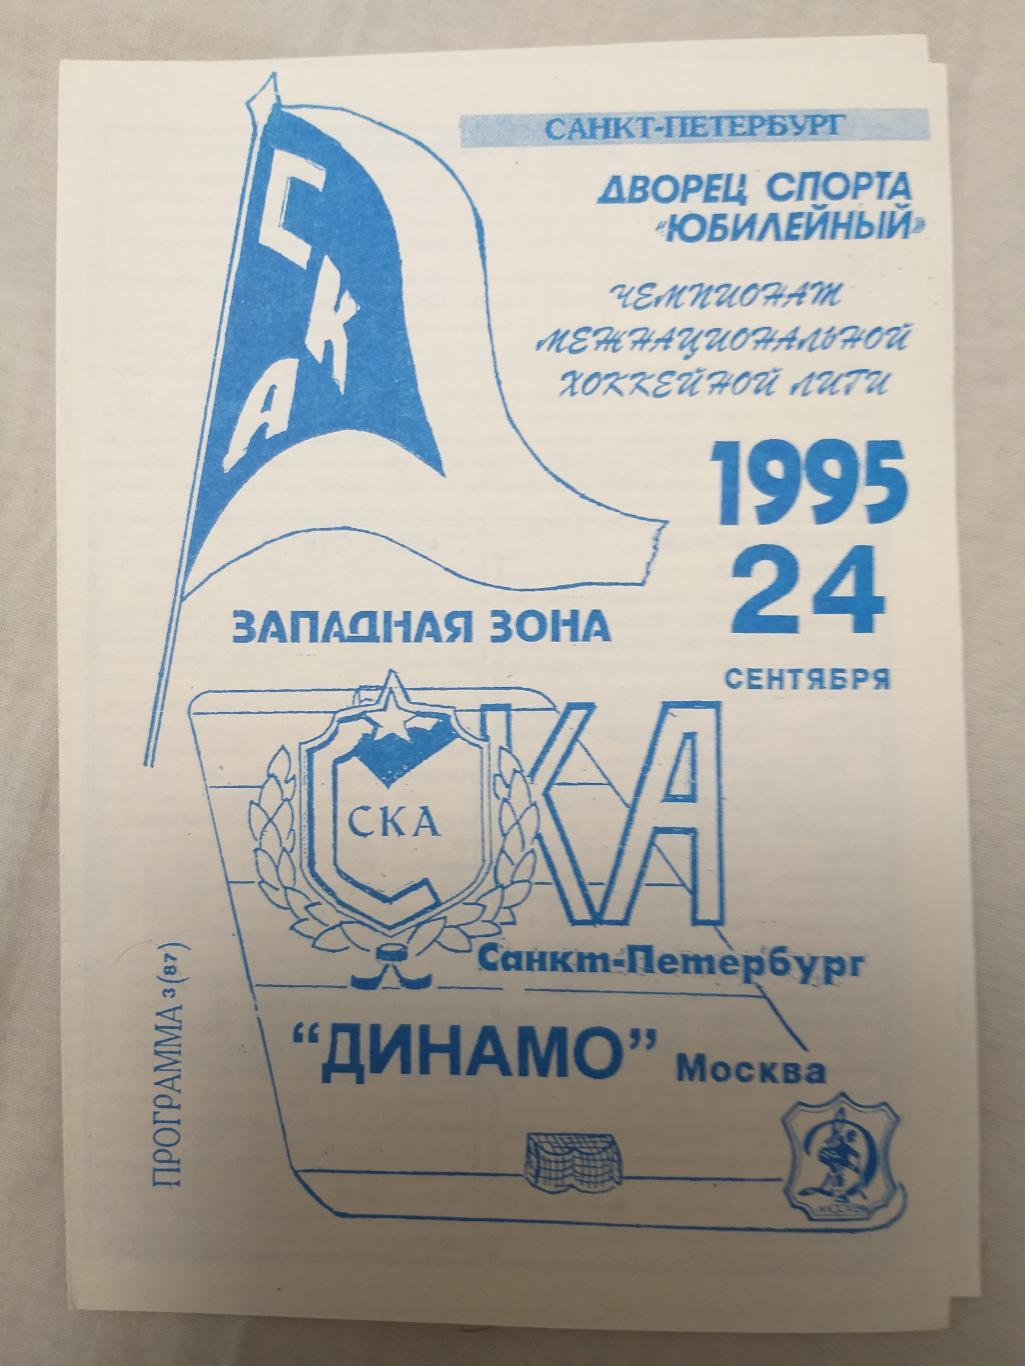 СКА-Динамо(Москва) 24.09.1995 второй вид